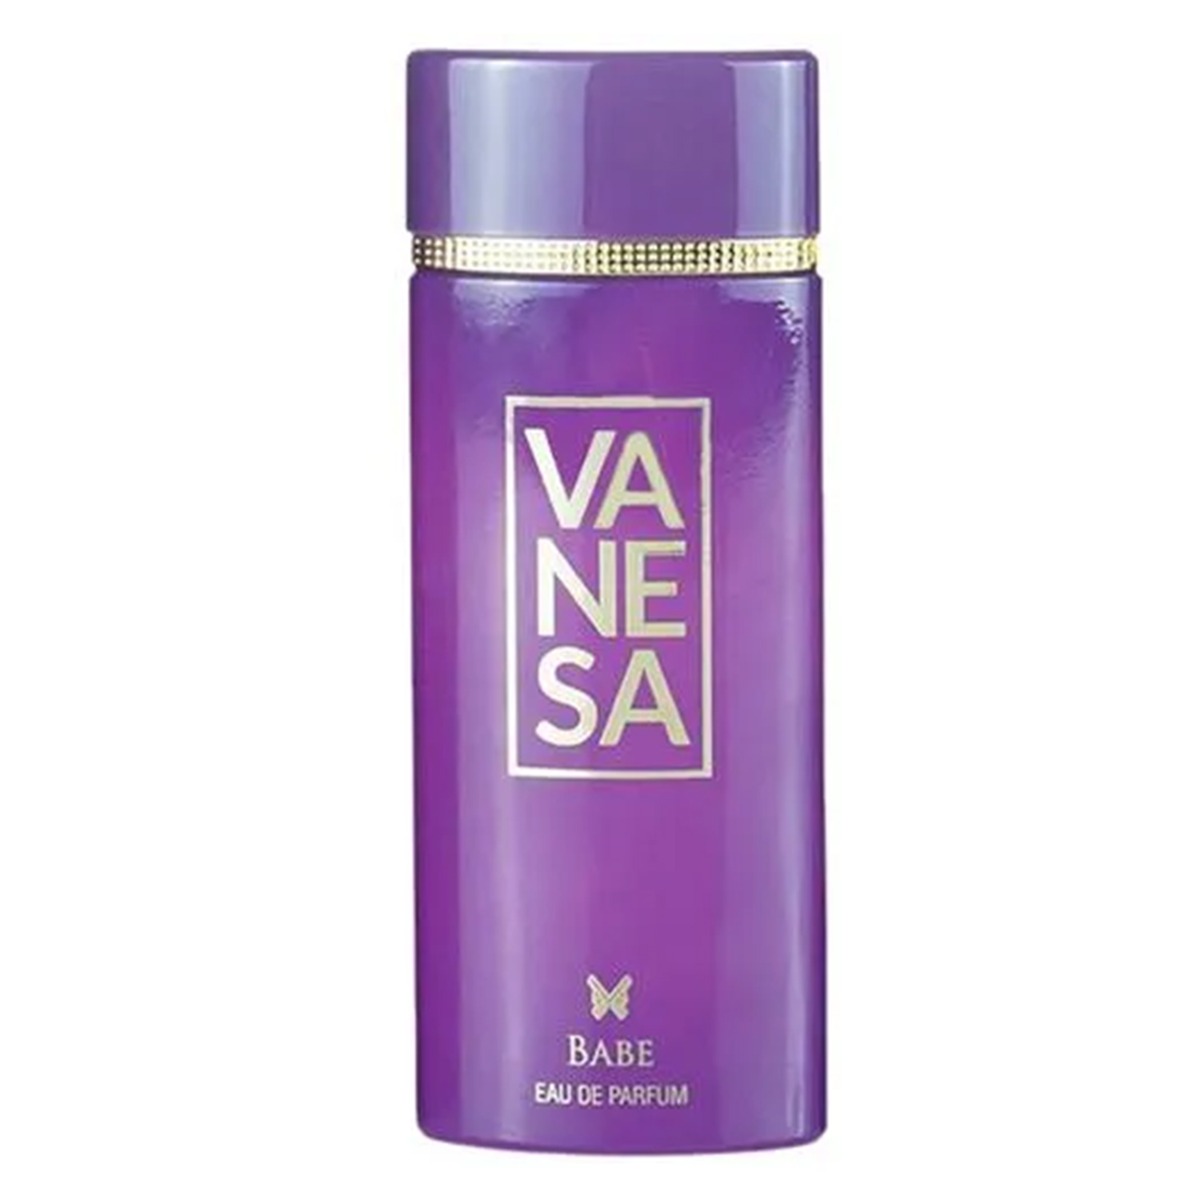 Vanesa Babe Perfume For Women, 60ml